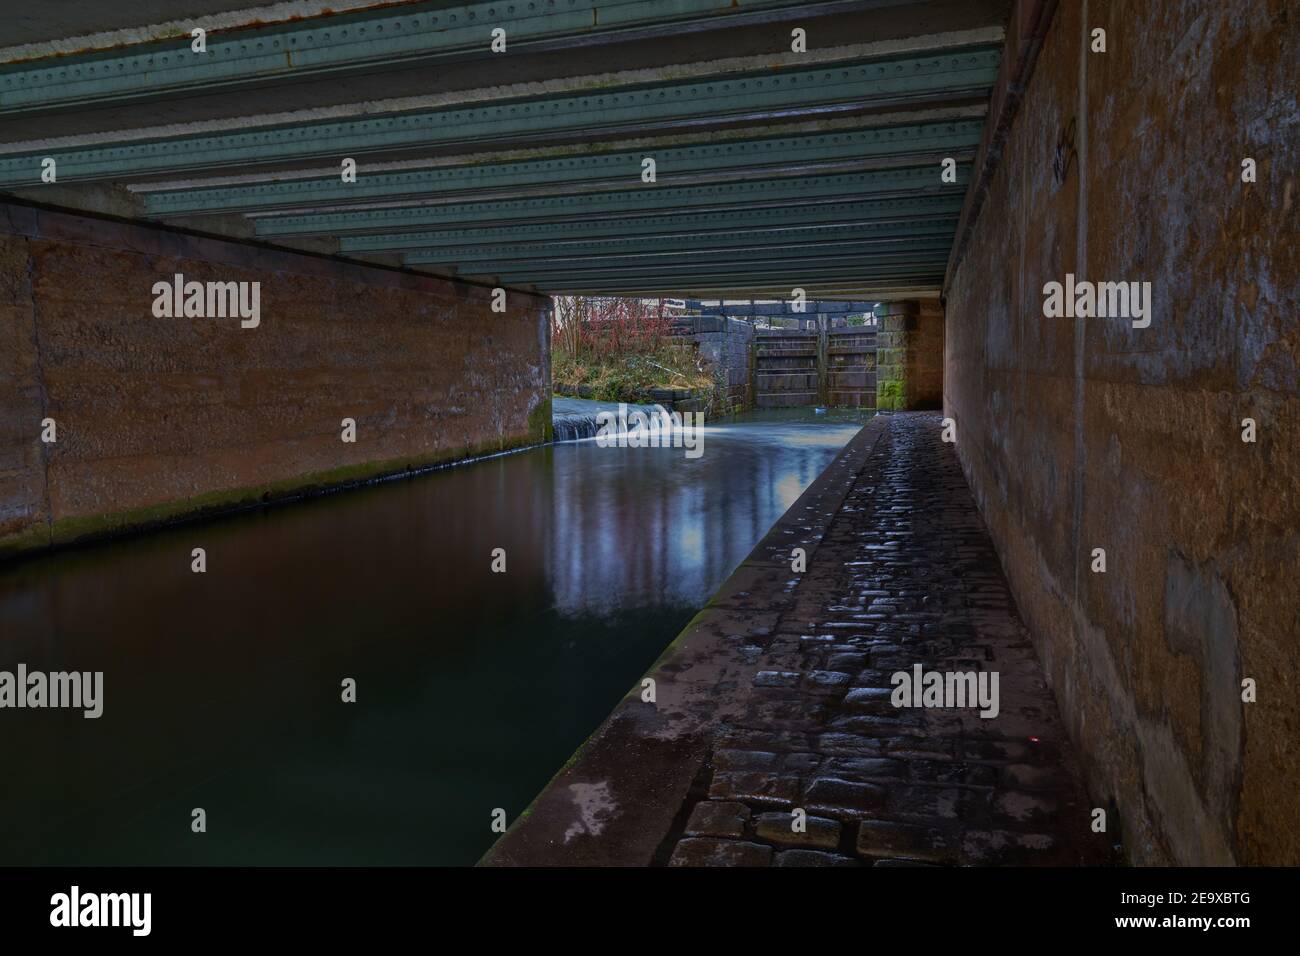 Under road bridge on Rochdale canal. Slattocks Stock Photo